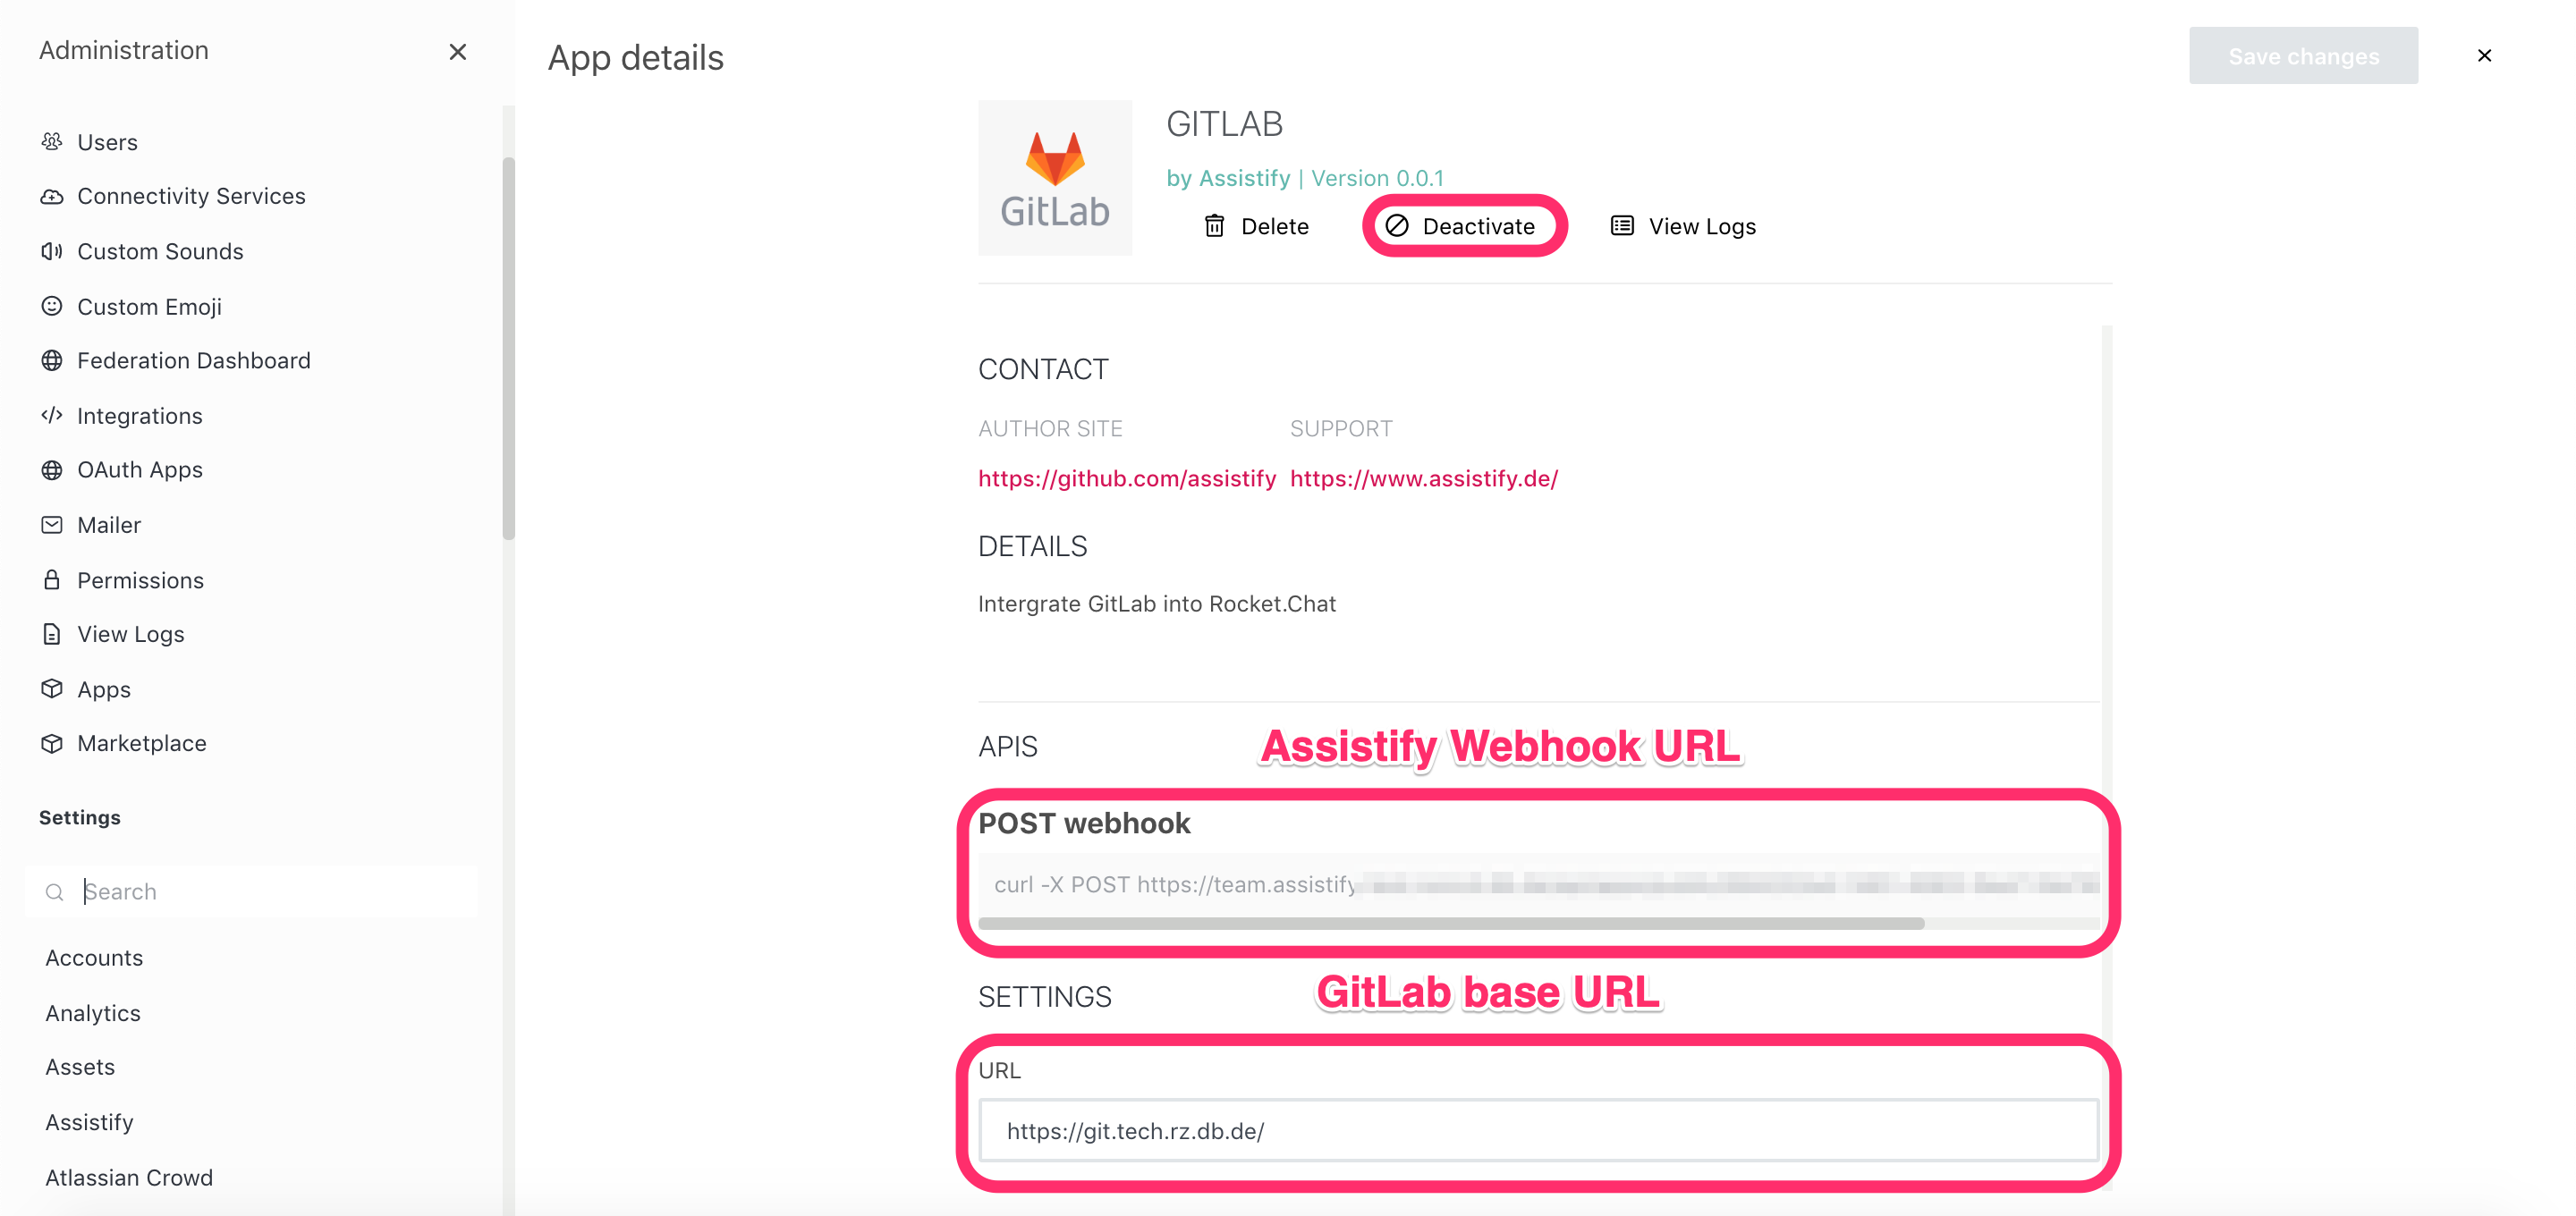 Assistify GitLab App settings